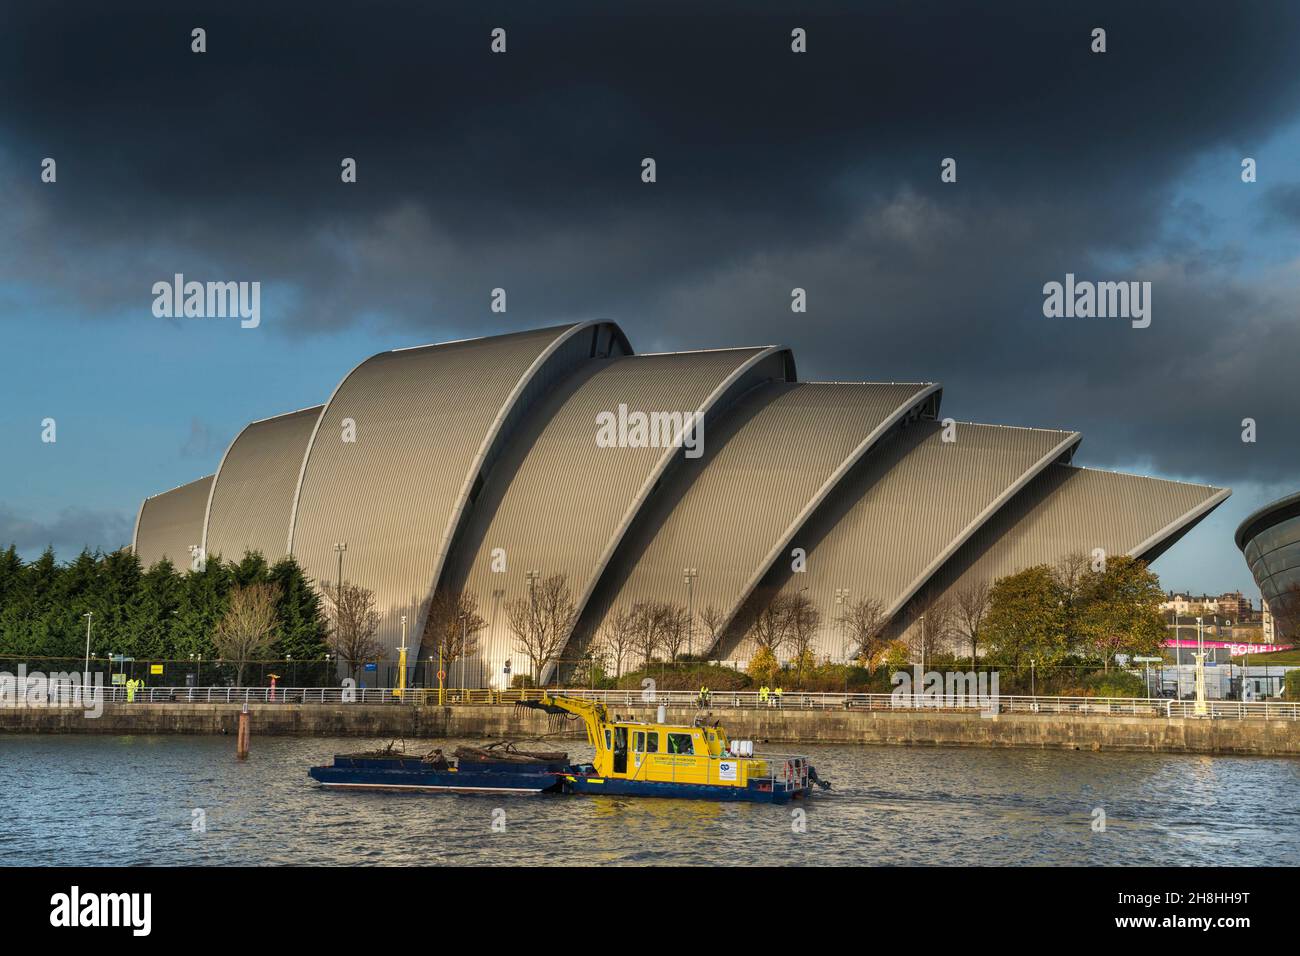 United-Kingdom, Scotland, SSE (Scottish Event Campus), Clyde auditorium also called Armadillo of Glasgow Stock Photo